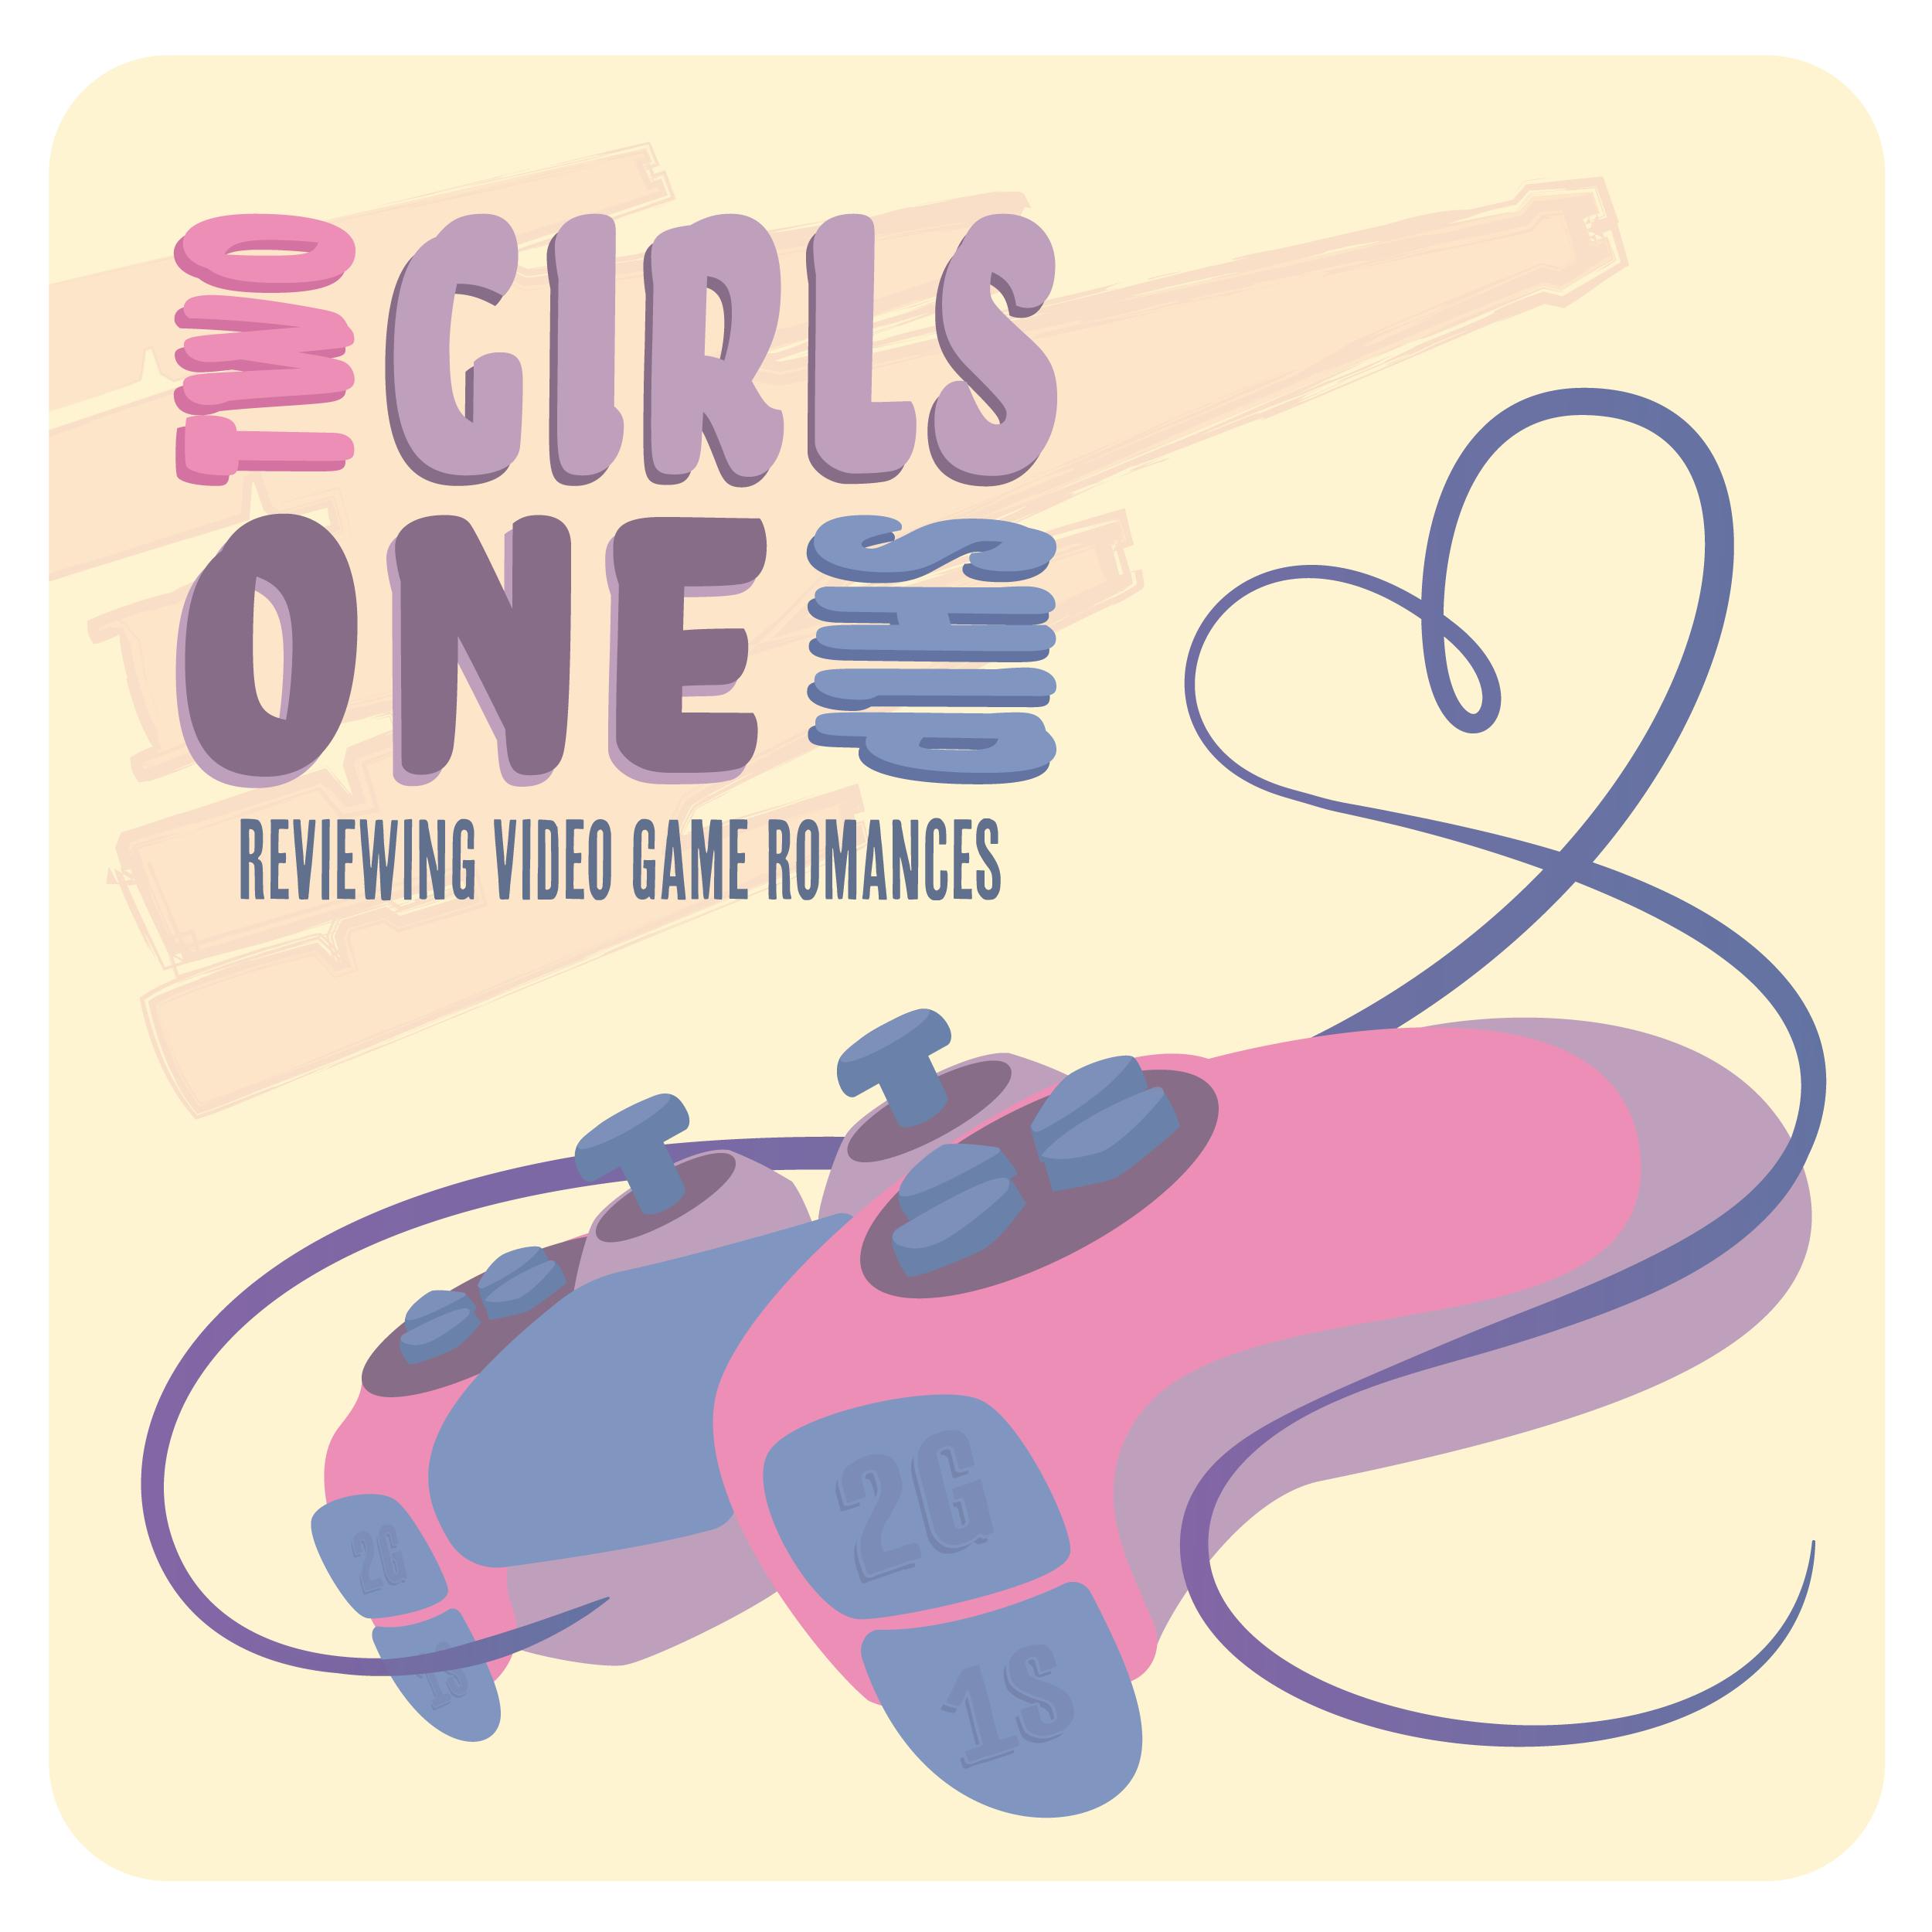 37. Gamer Girls, The Re-gamening: Mary Kenney Returns